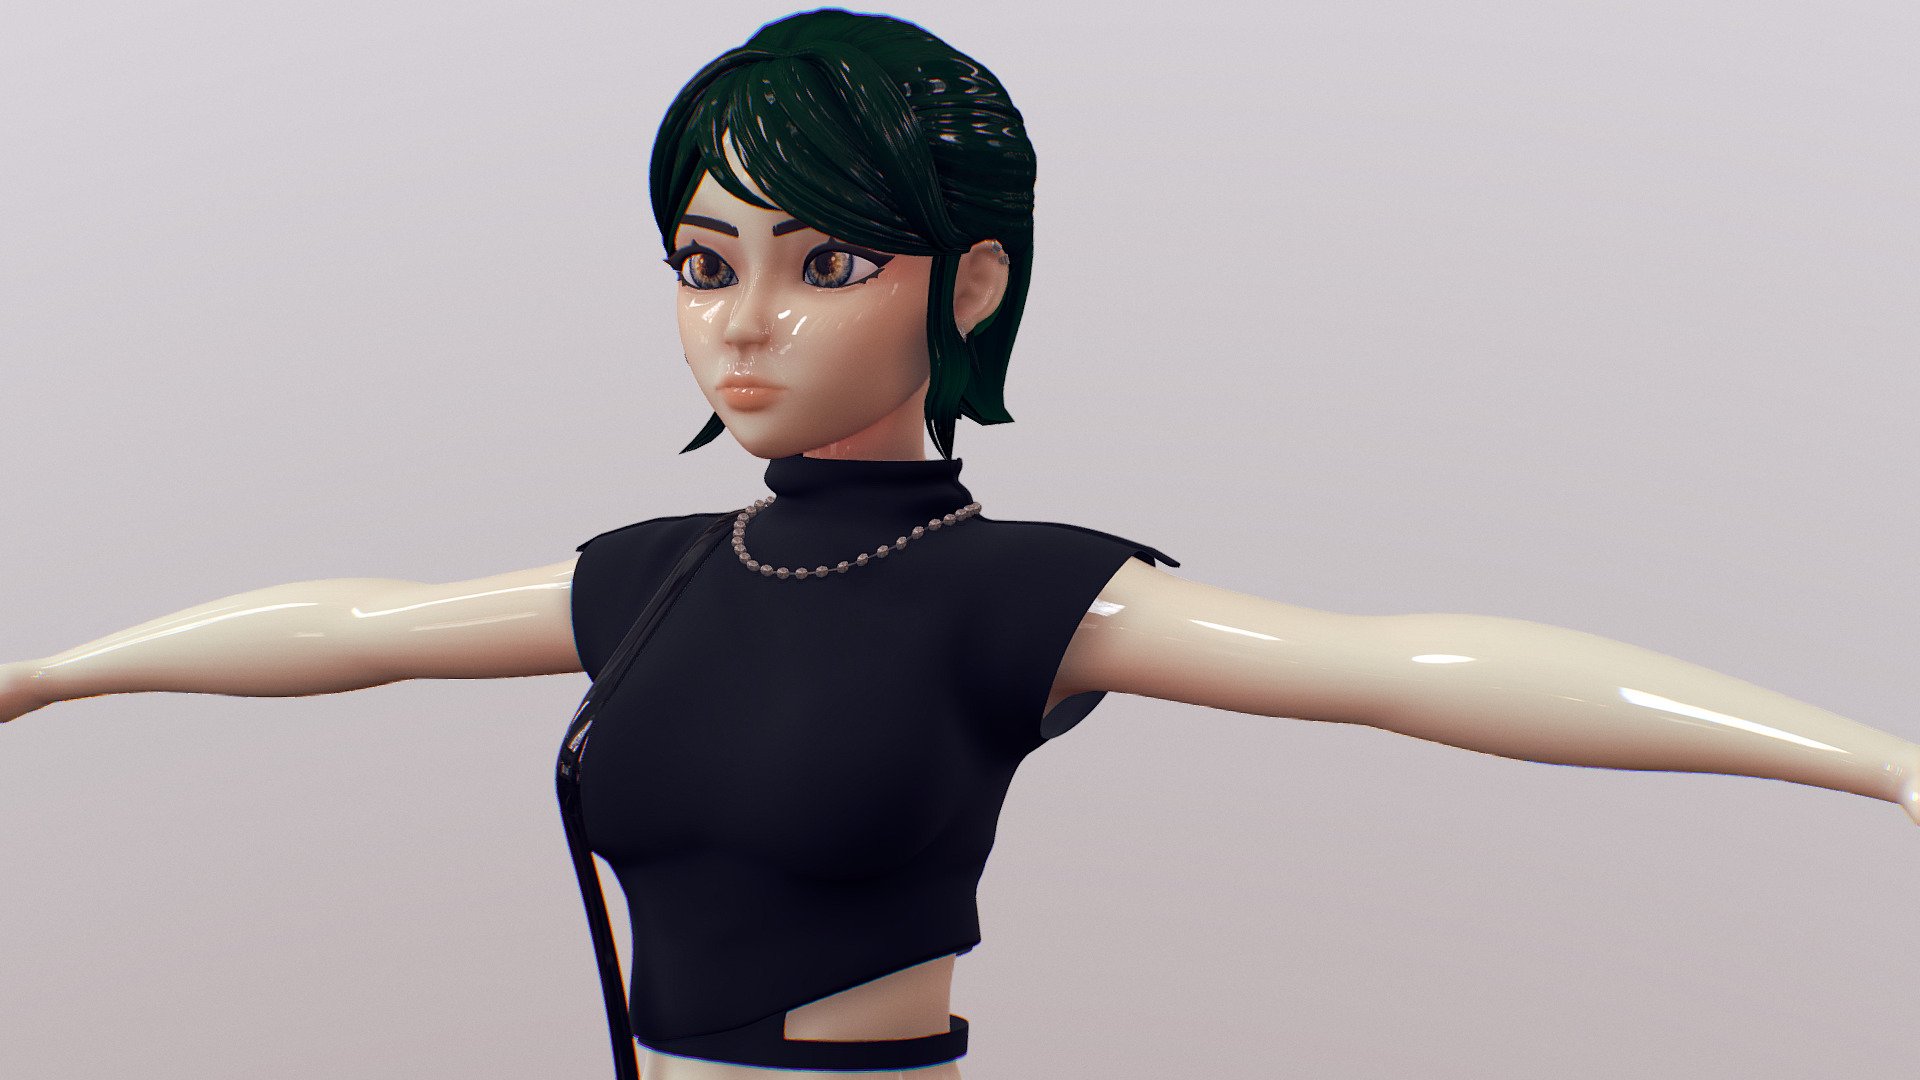 Cyberpunk fashion inspired NPC girl. Everything was made by me in Blender! - CYBERPUNK NPC GIRL - 3D model by Kathy Kim Nguyen (@kathykim) 3d model